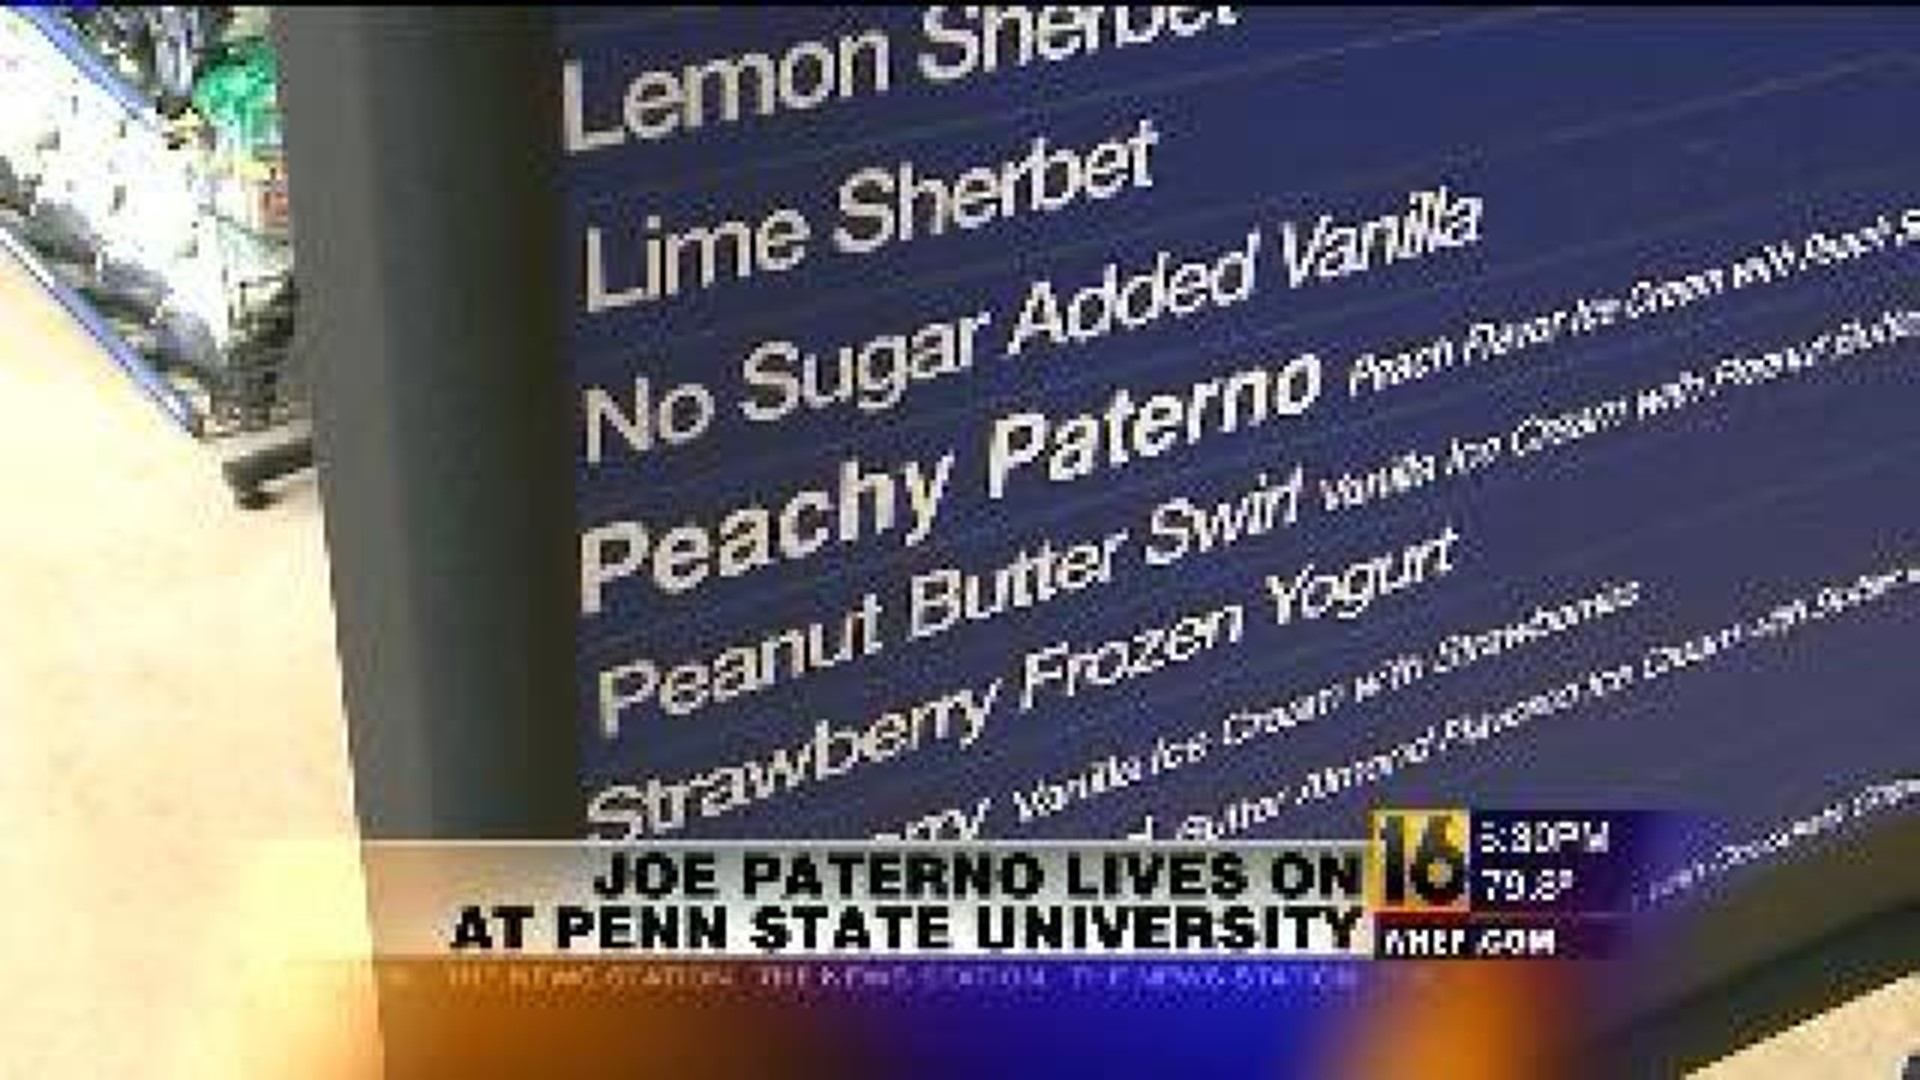 Joe Paterno Lives on at Penn State University